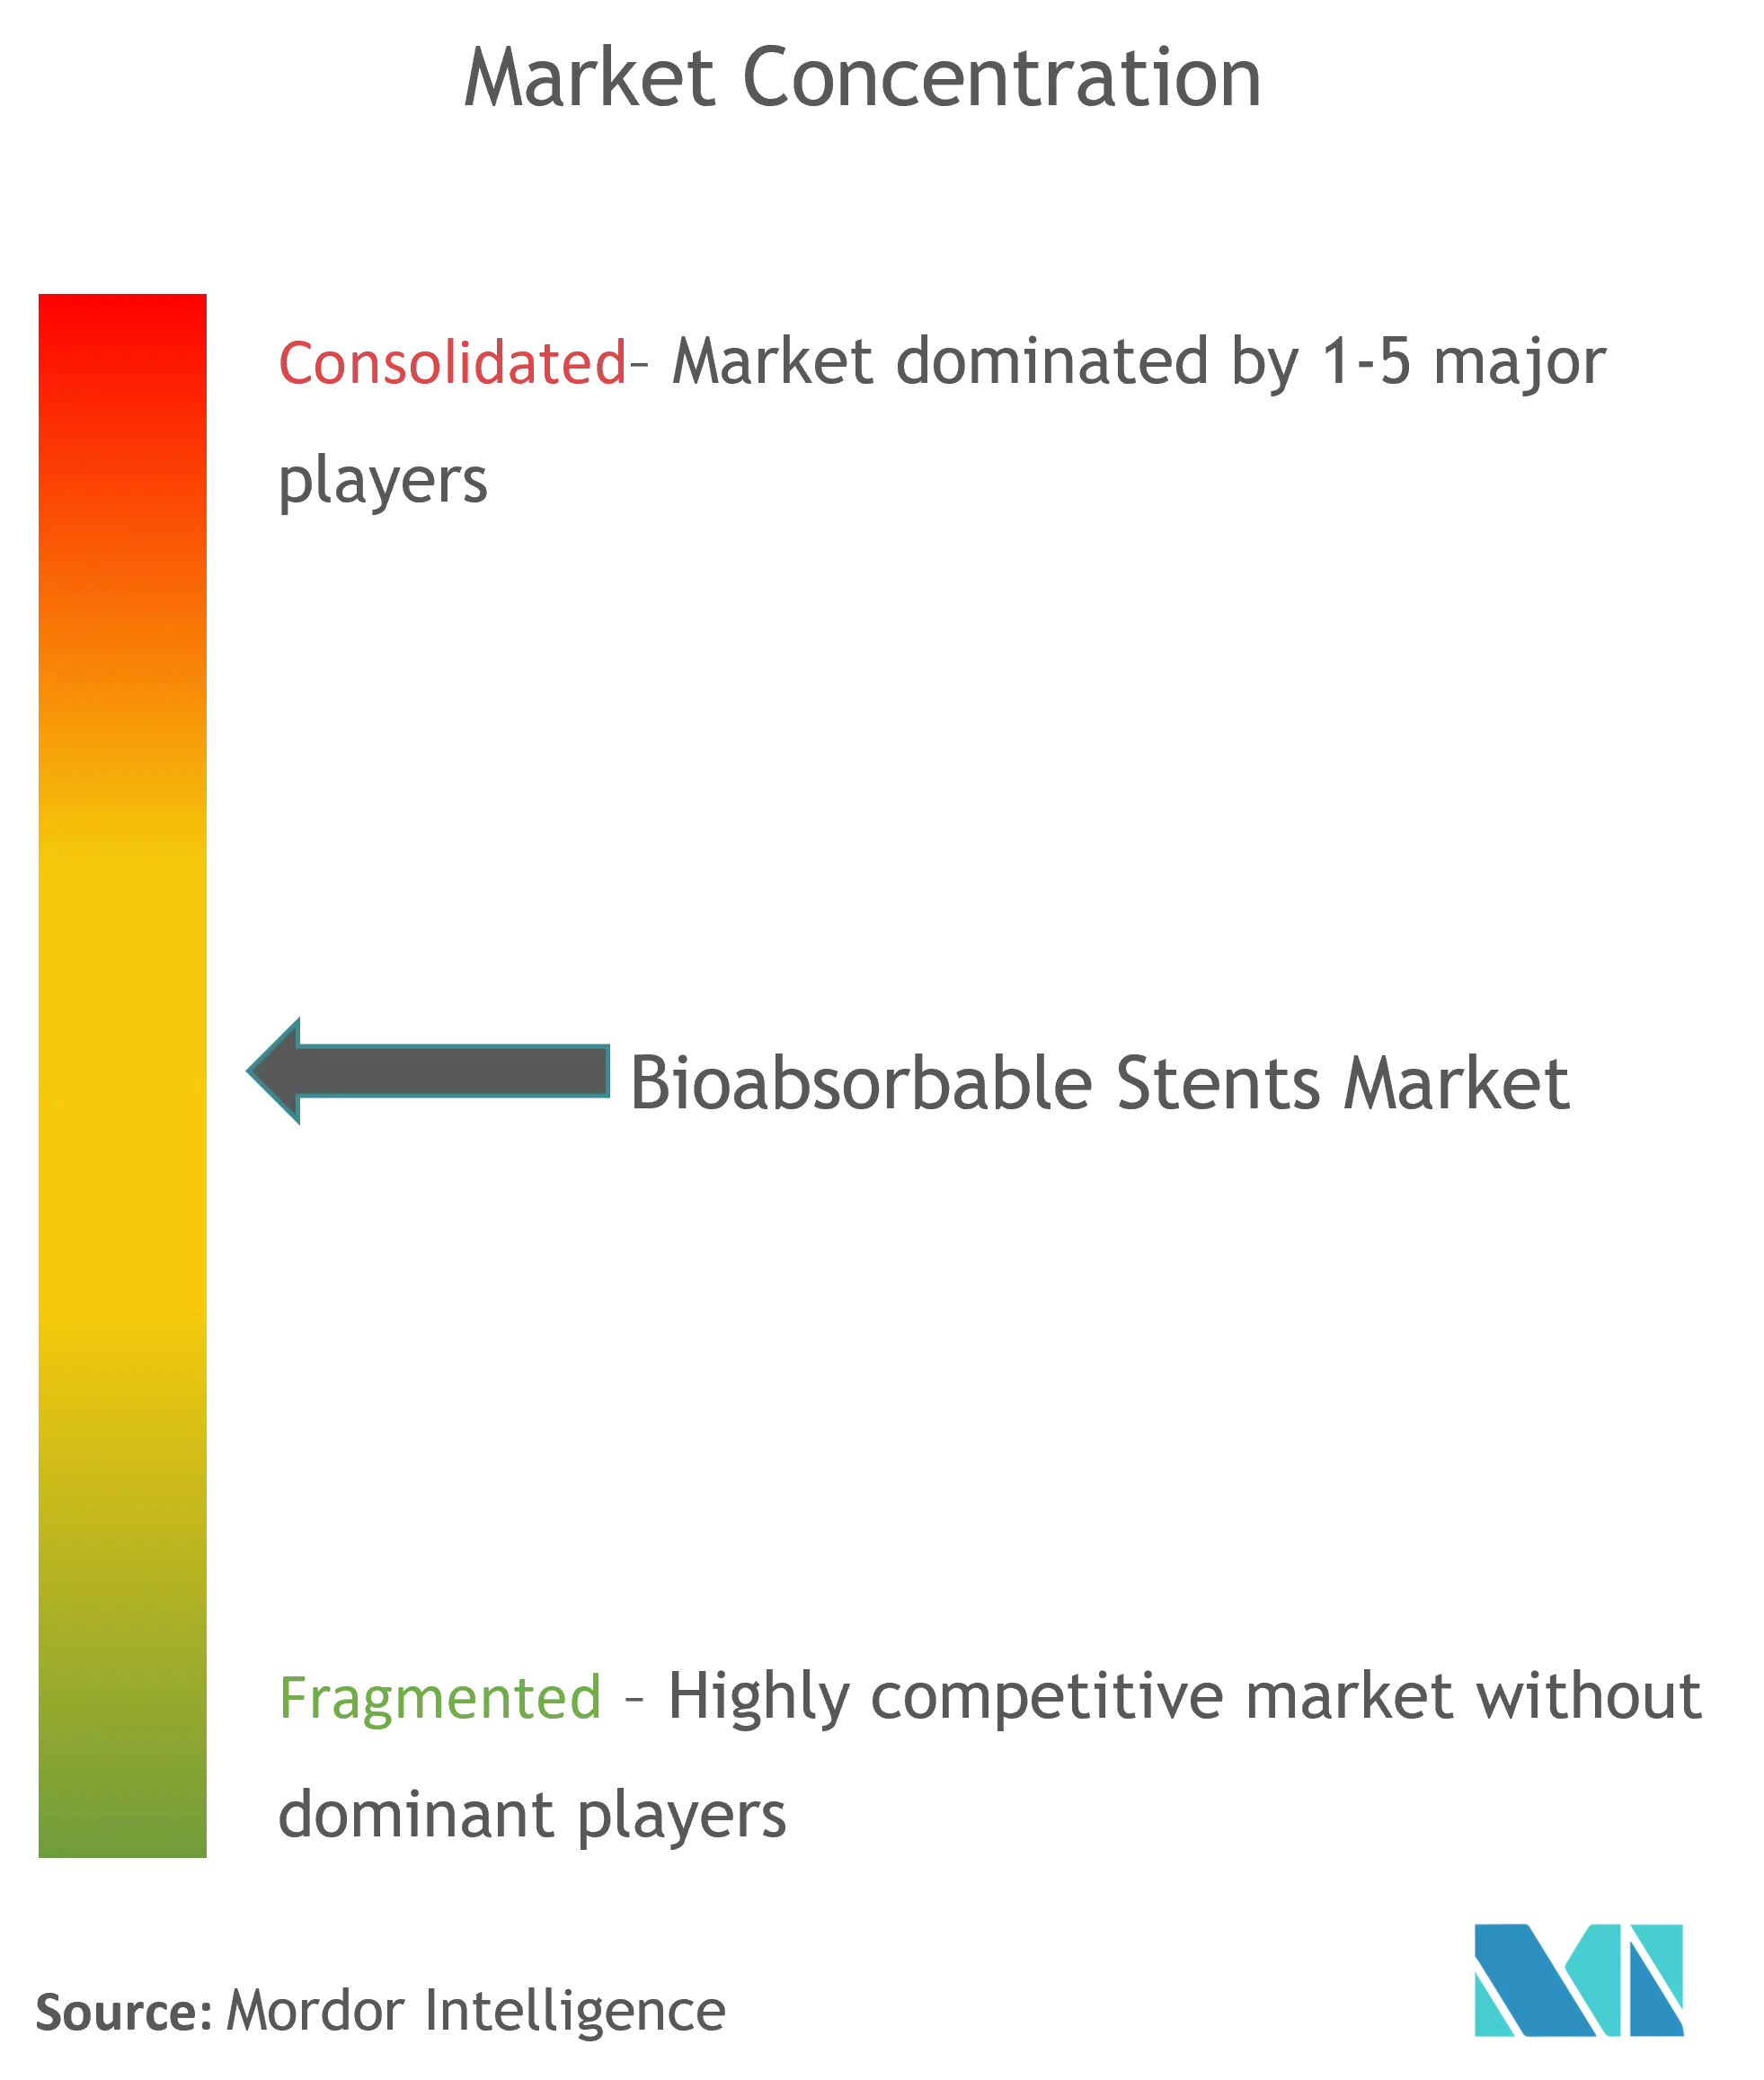 Bioabsorbable Stents Market Concentration